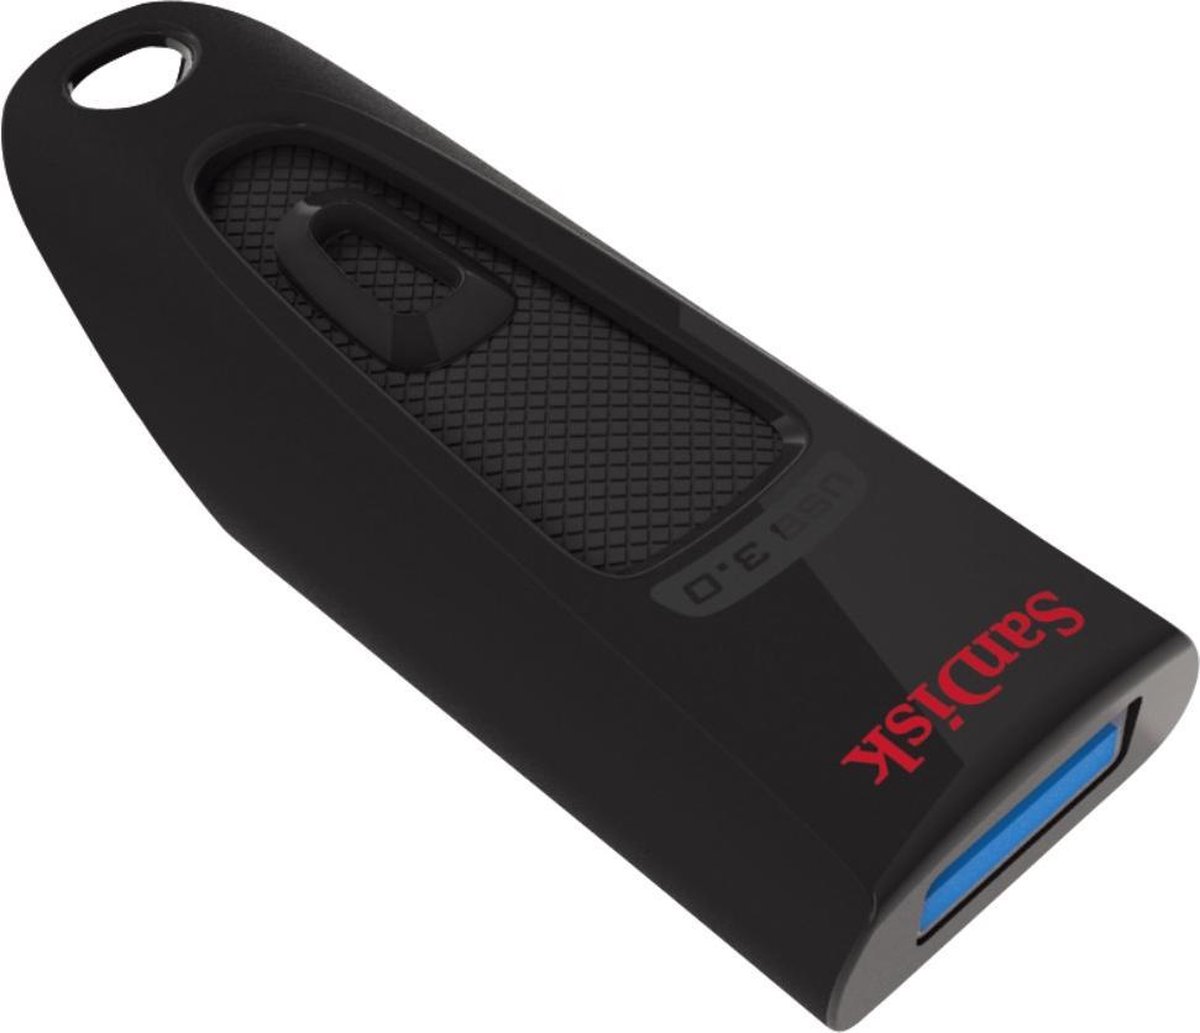 Sandisk Cruzer Ultra | 64GB | USB 3.0A - USB Stick - SanDisk